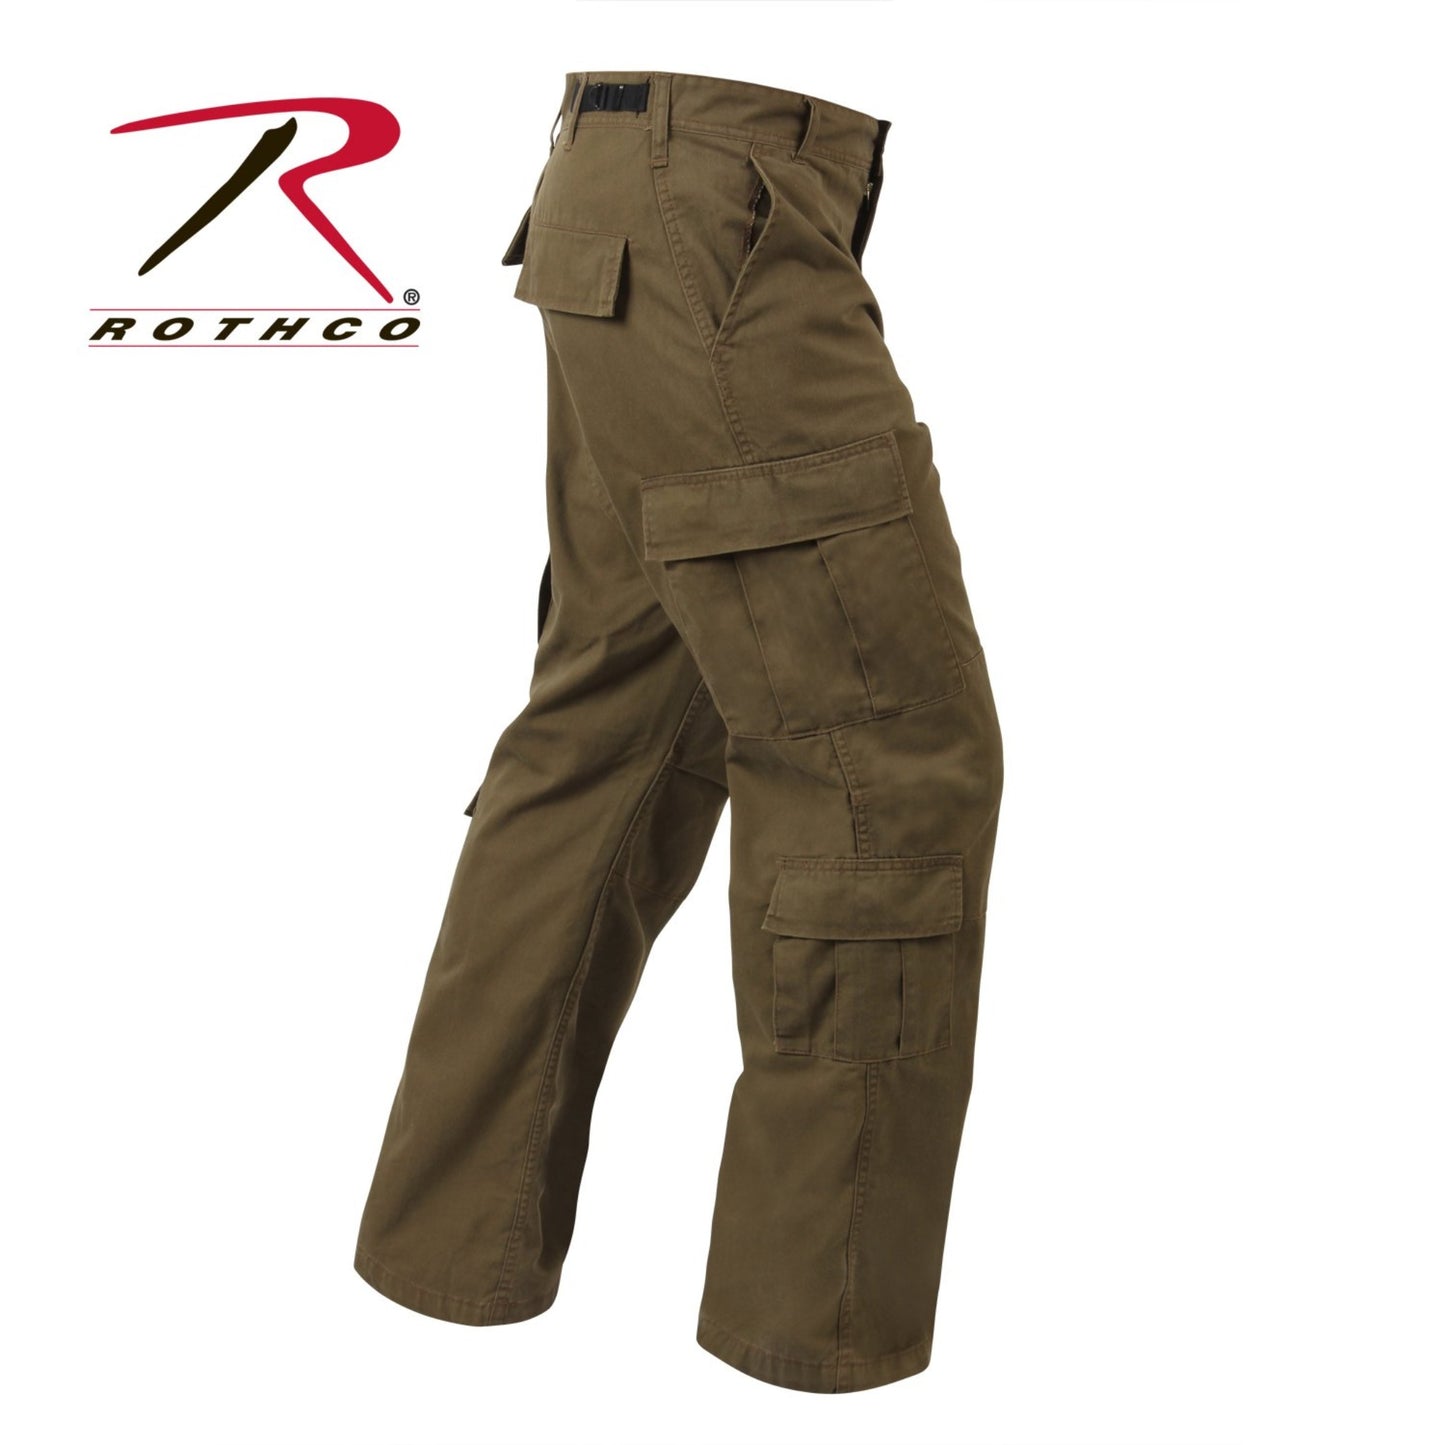 Paratrooper Fatigue Pants, Vintage Style